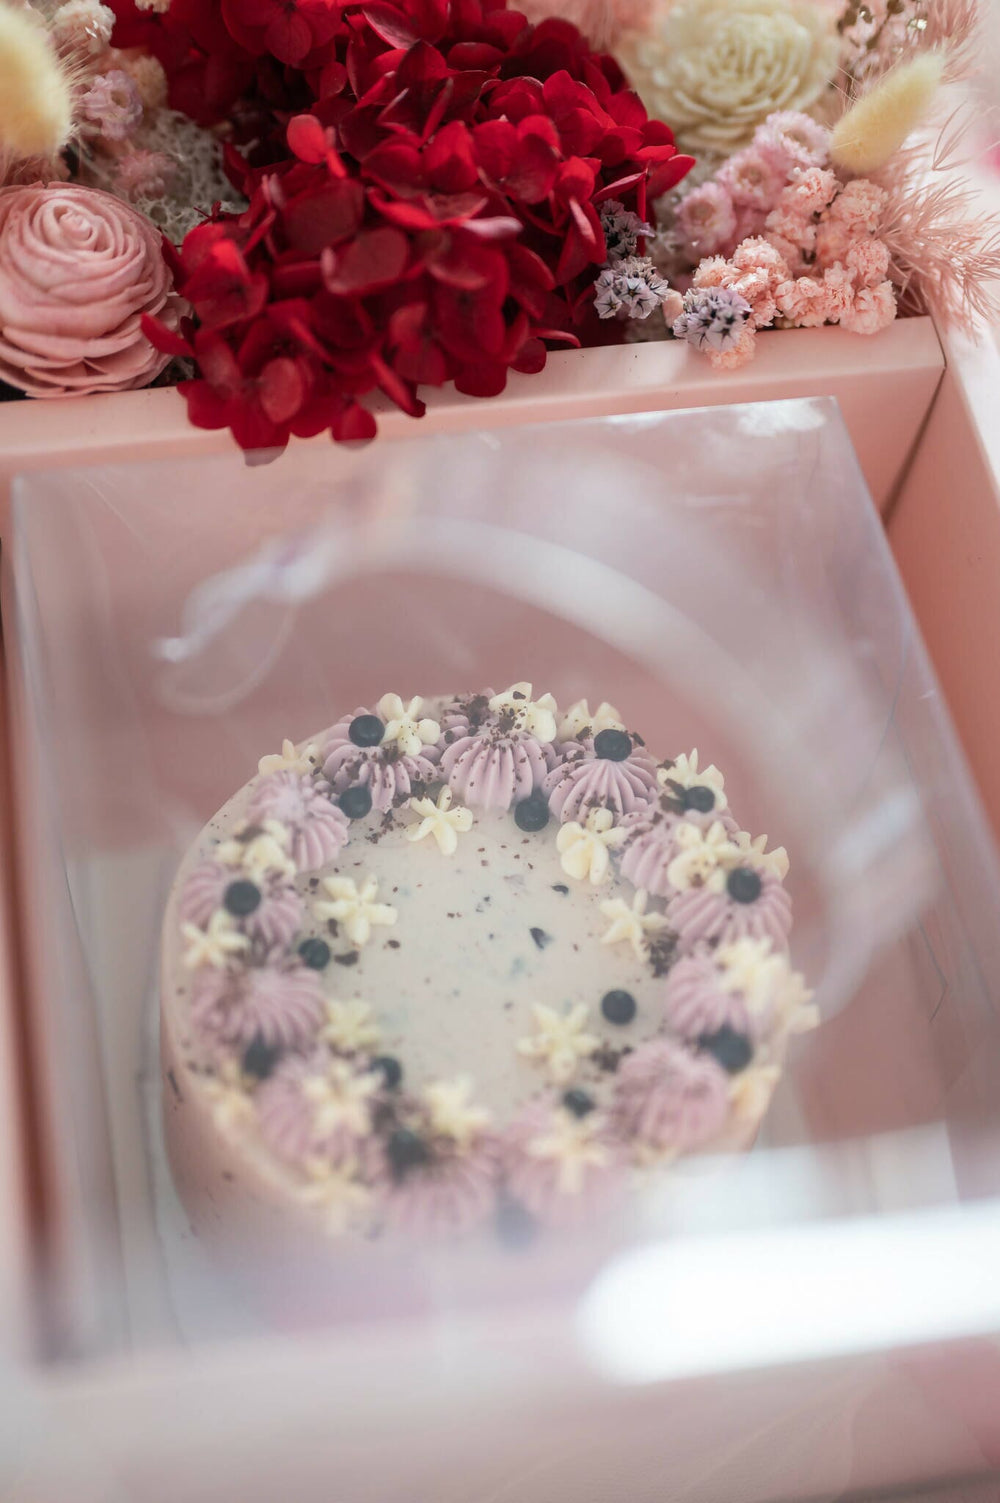 One Sweet Day Cake and Flower Picnic Date Set Flower Sets Studio Flourish 